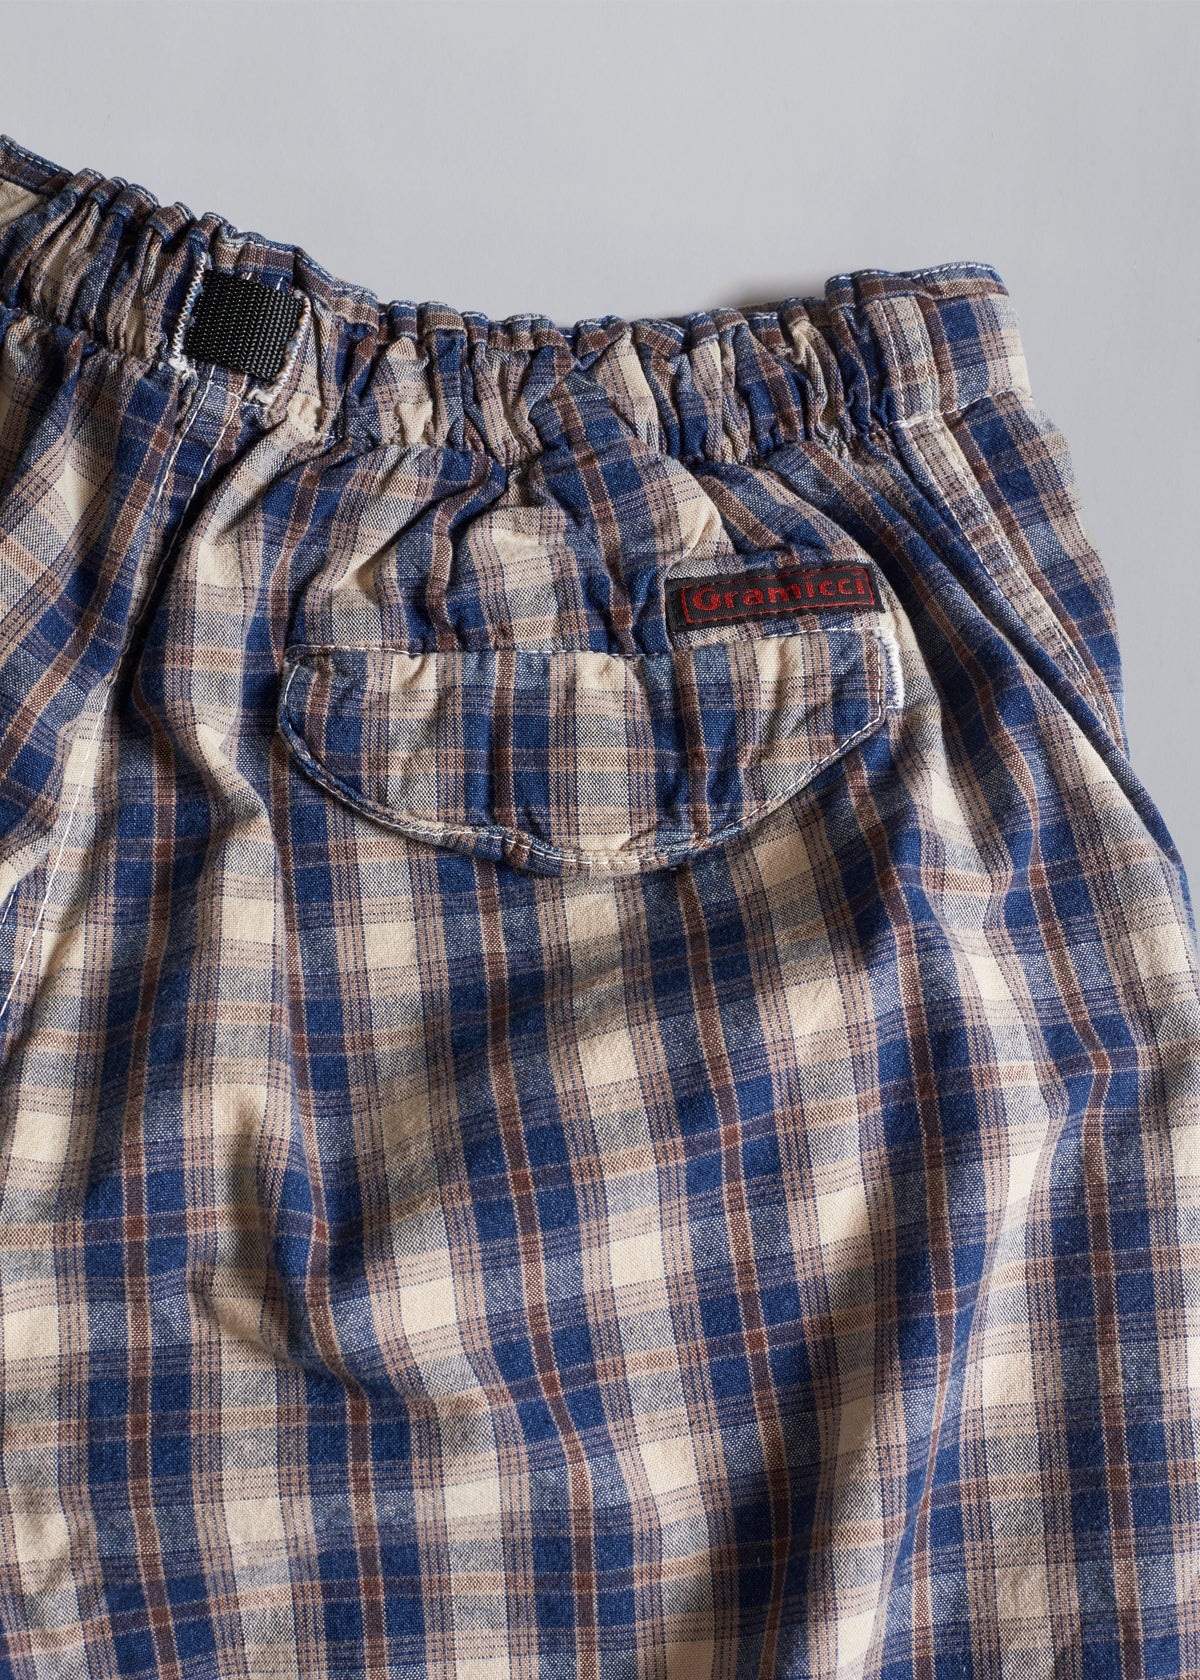 Big Check Shorts 1990's - Medium - The Archivist Store